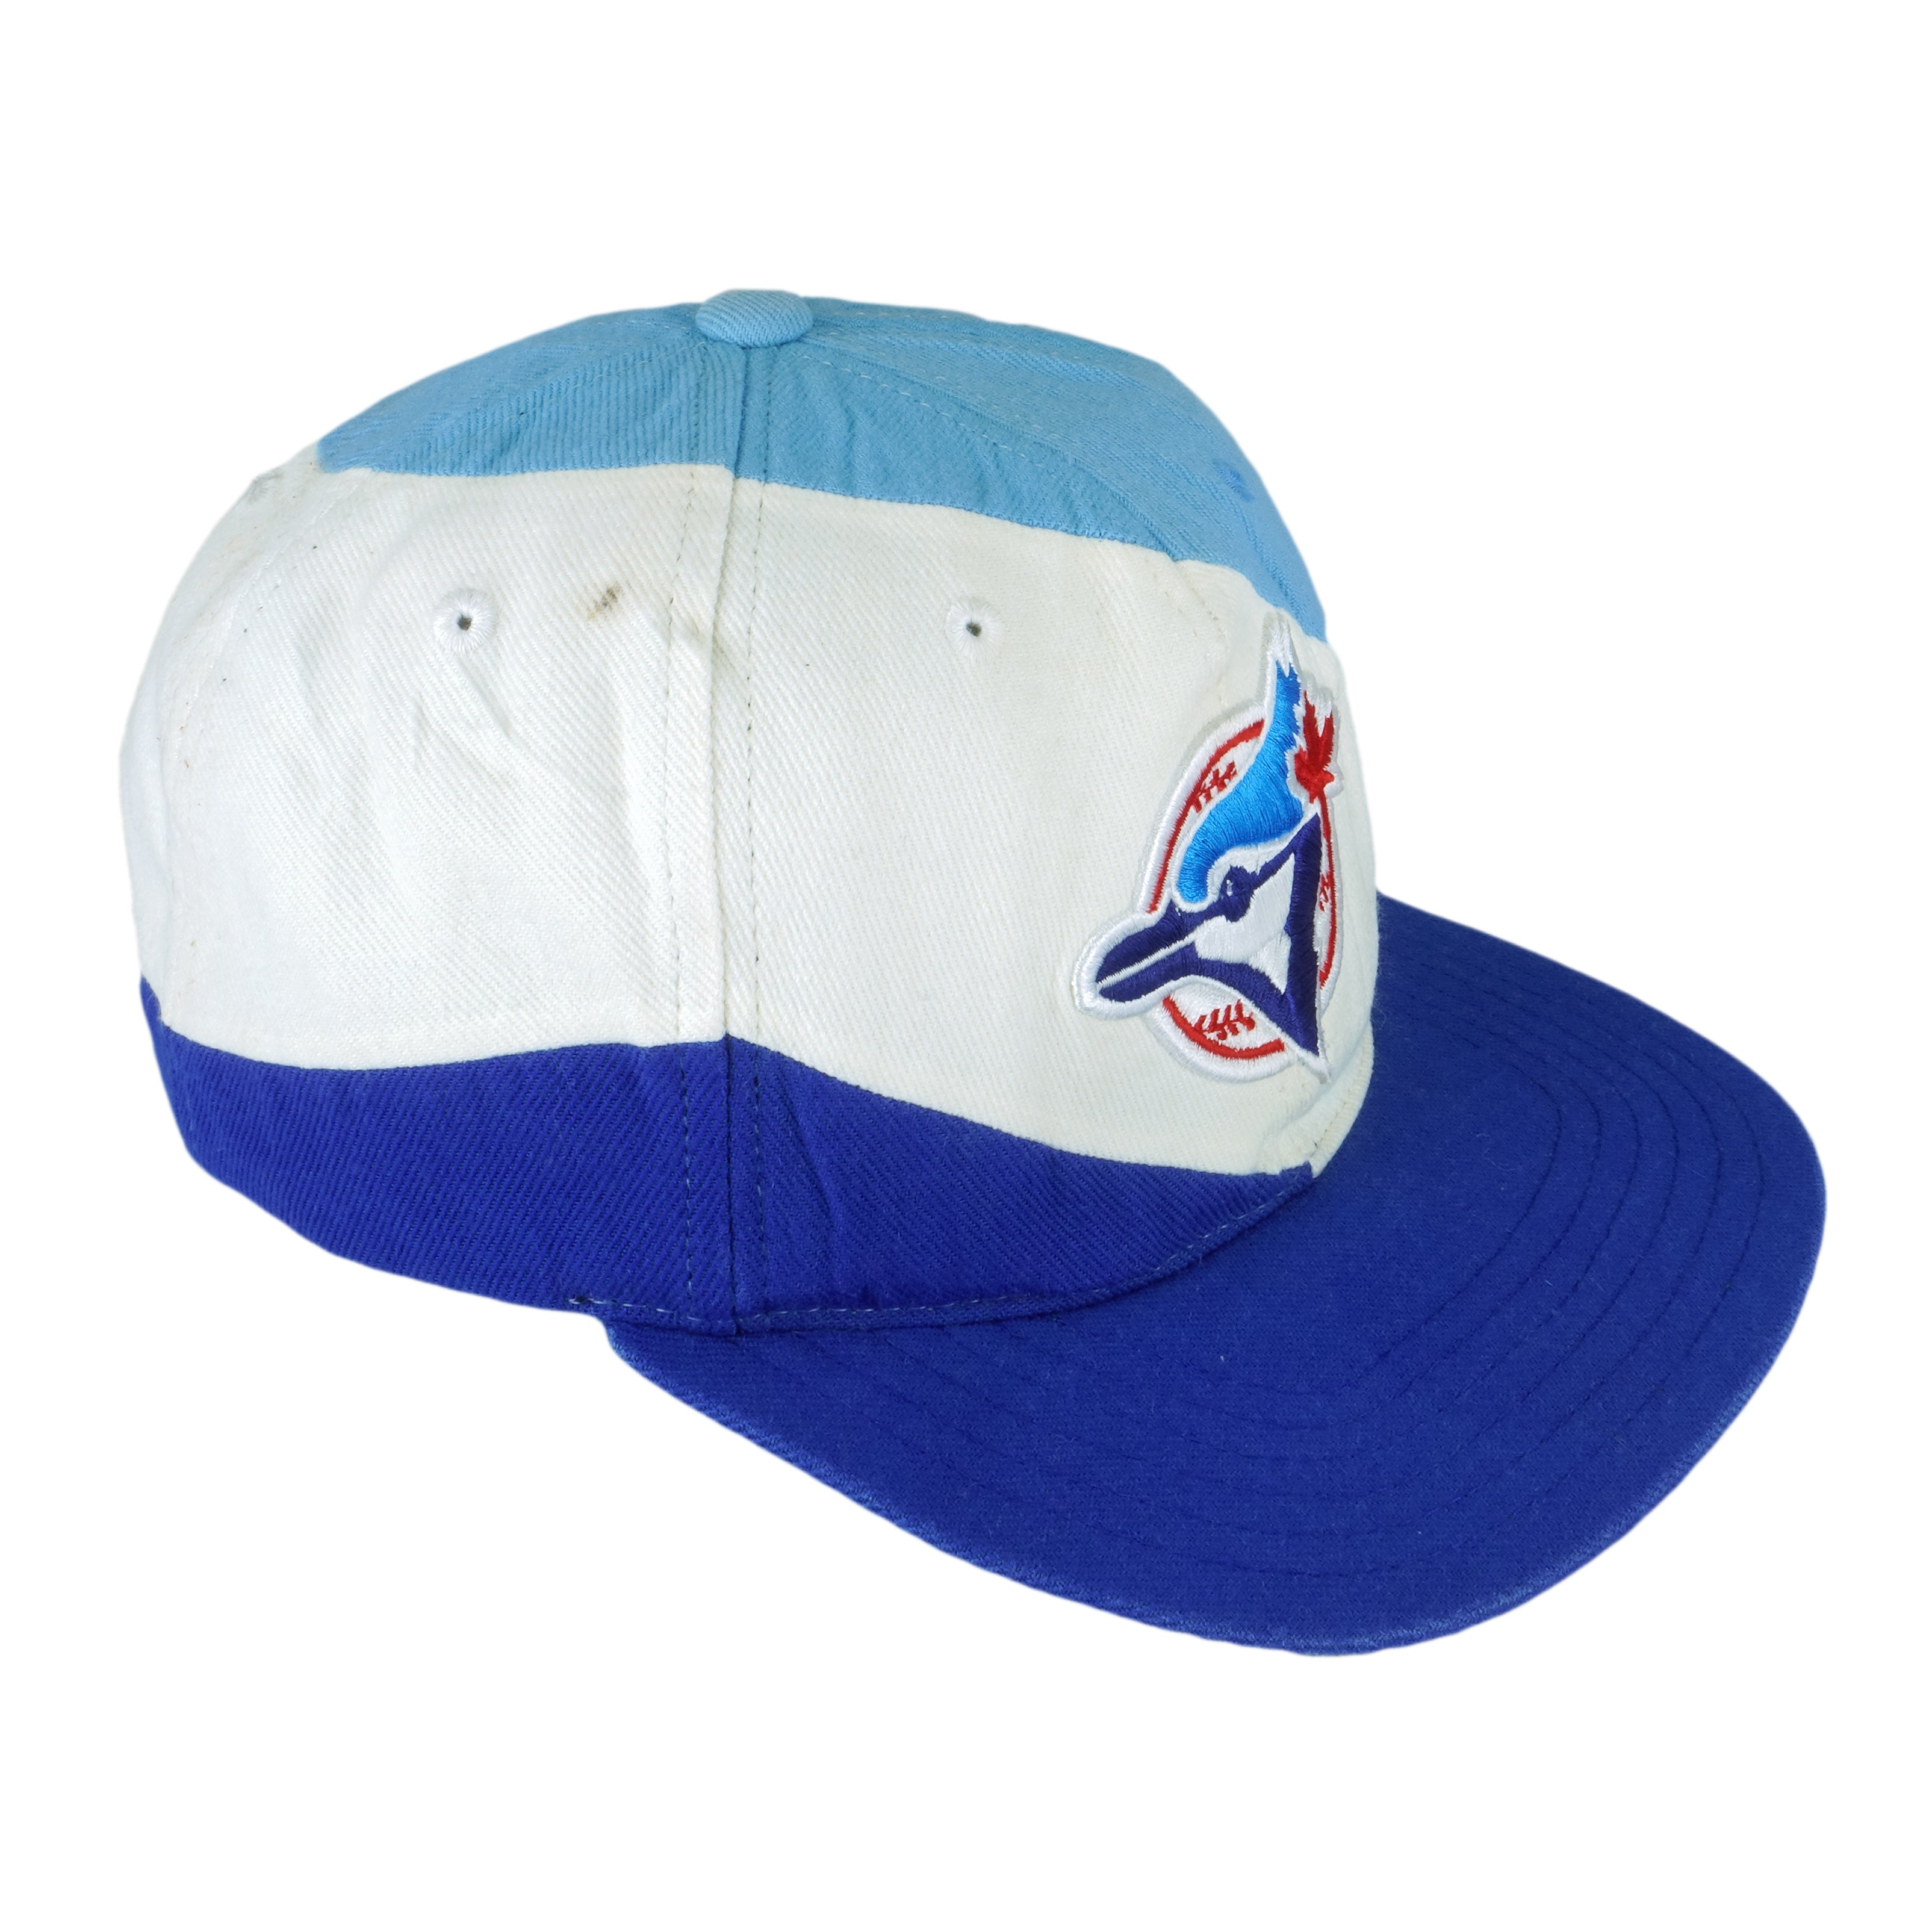 retro blue jays hat